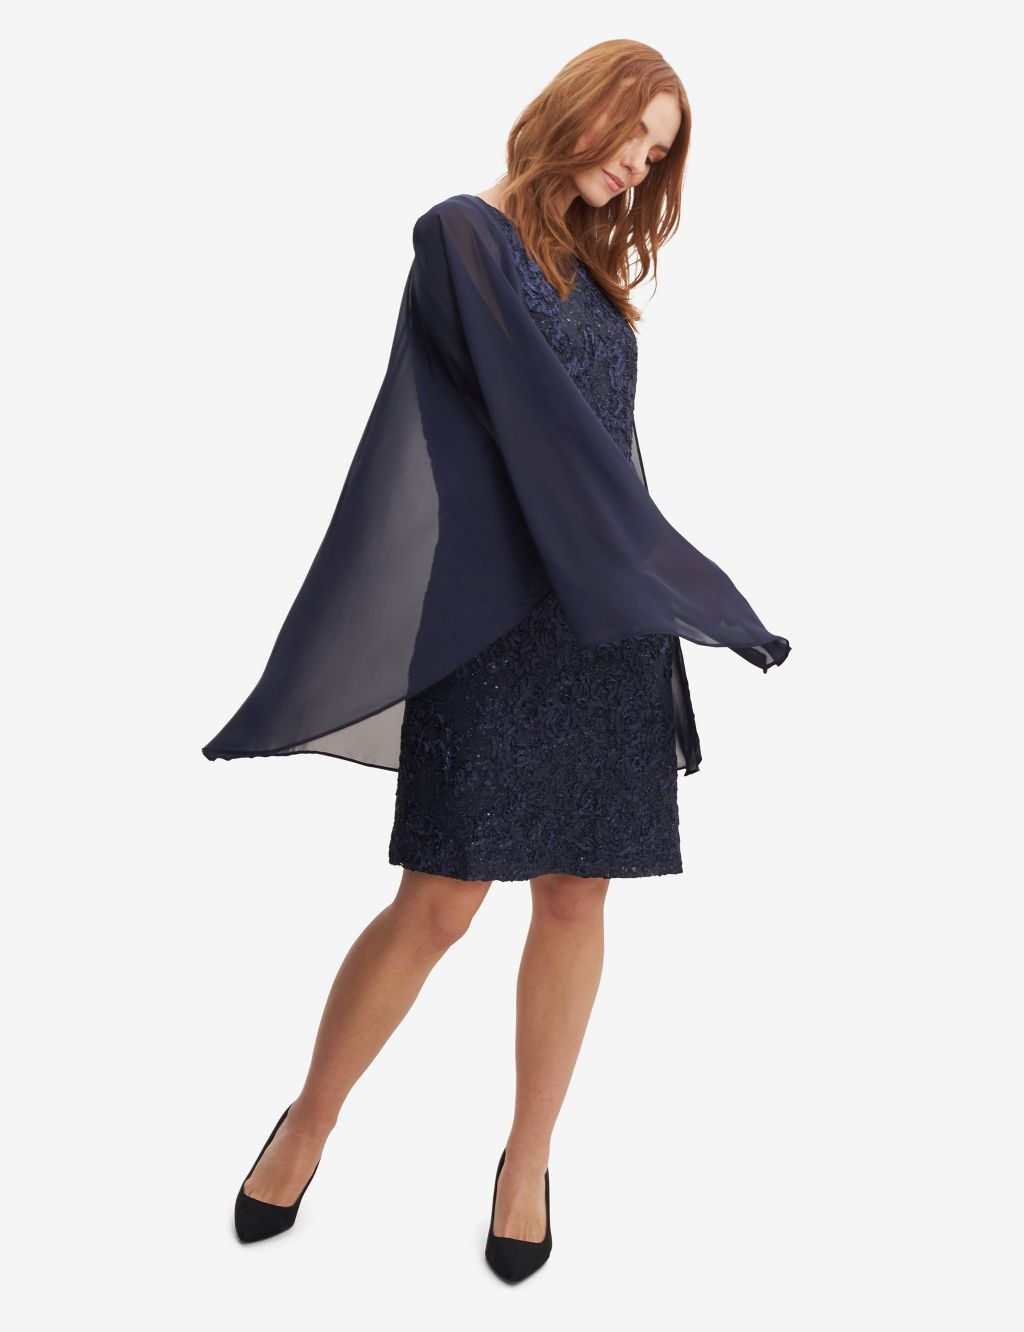 Lace Knee Length Shift Dress with Jacket image 5